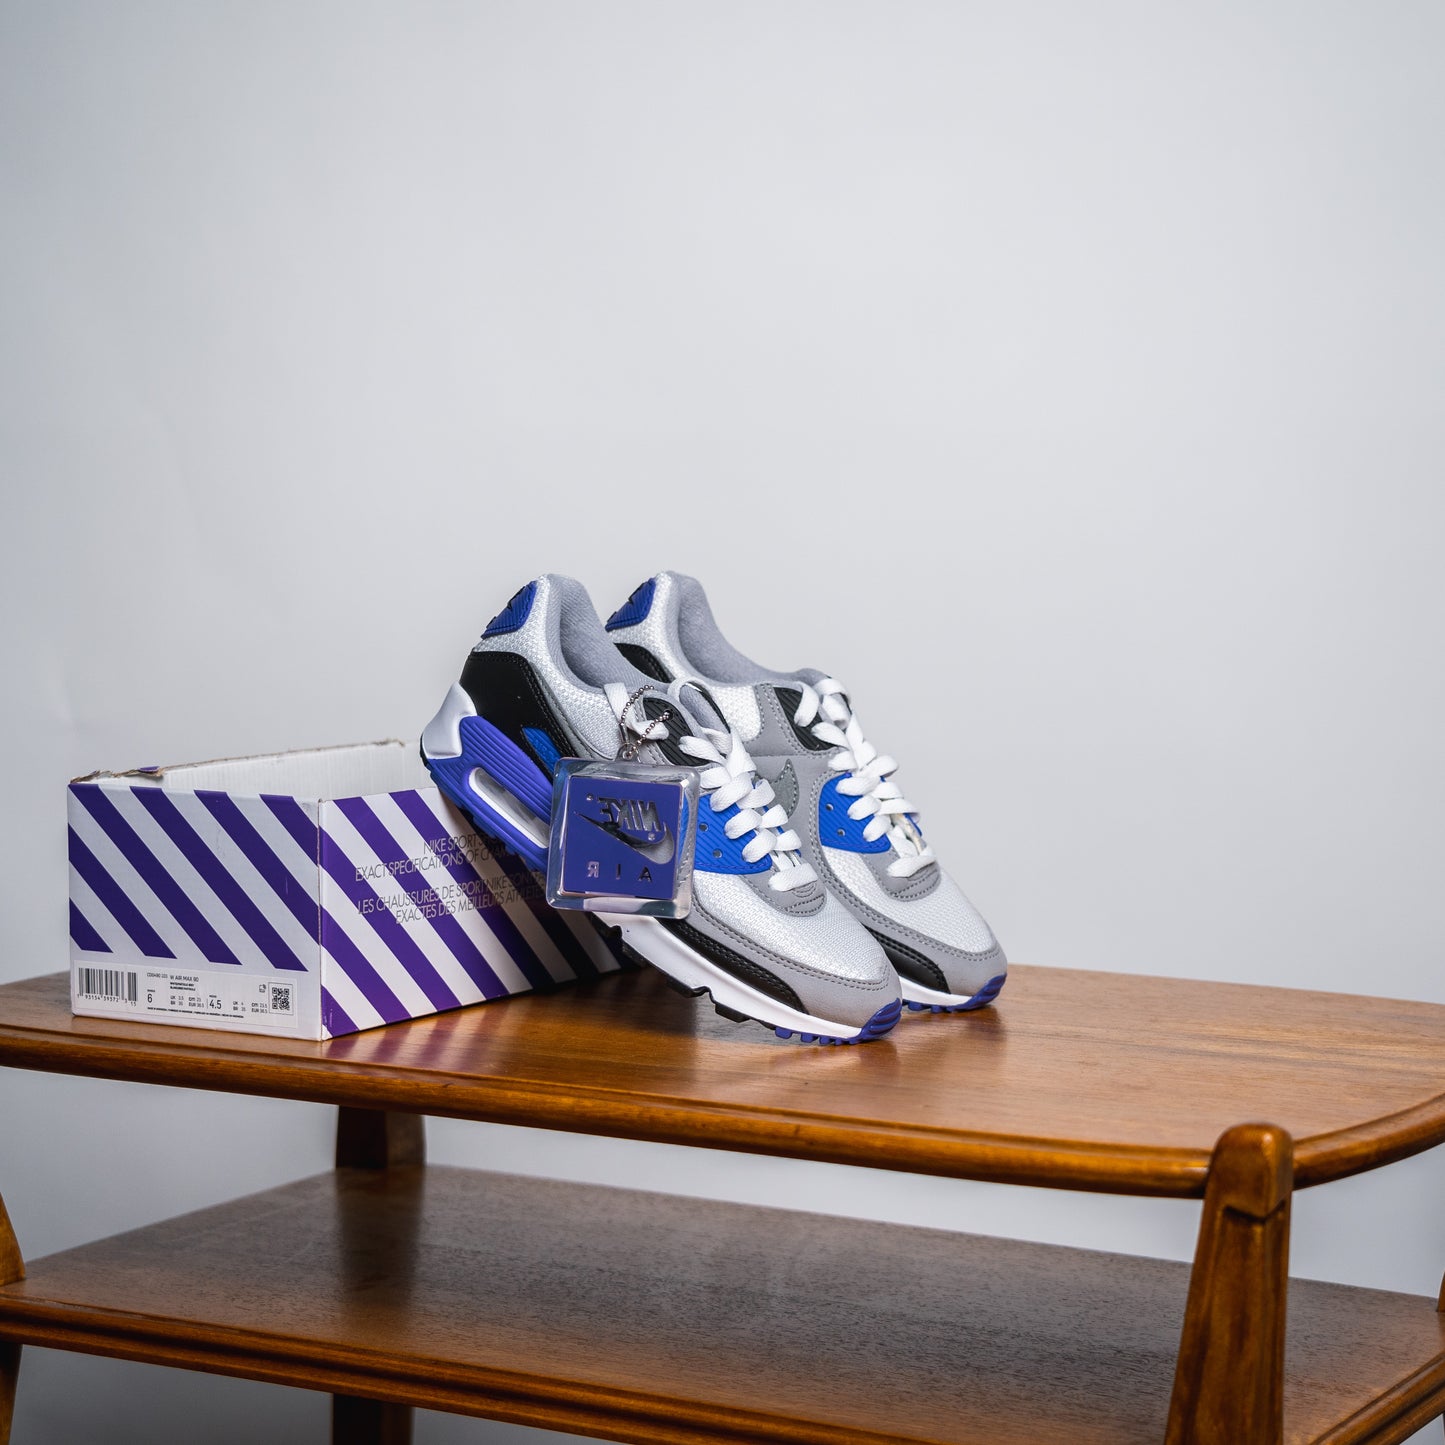 Nike WMNS Air Max 90 "Hyper Grape" // Grösse EU 36.5 // Sneaker